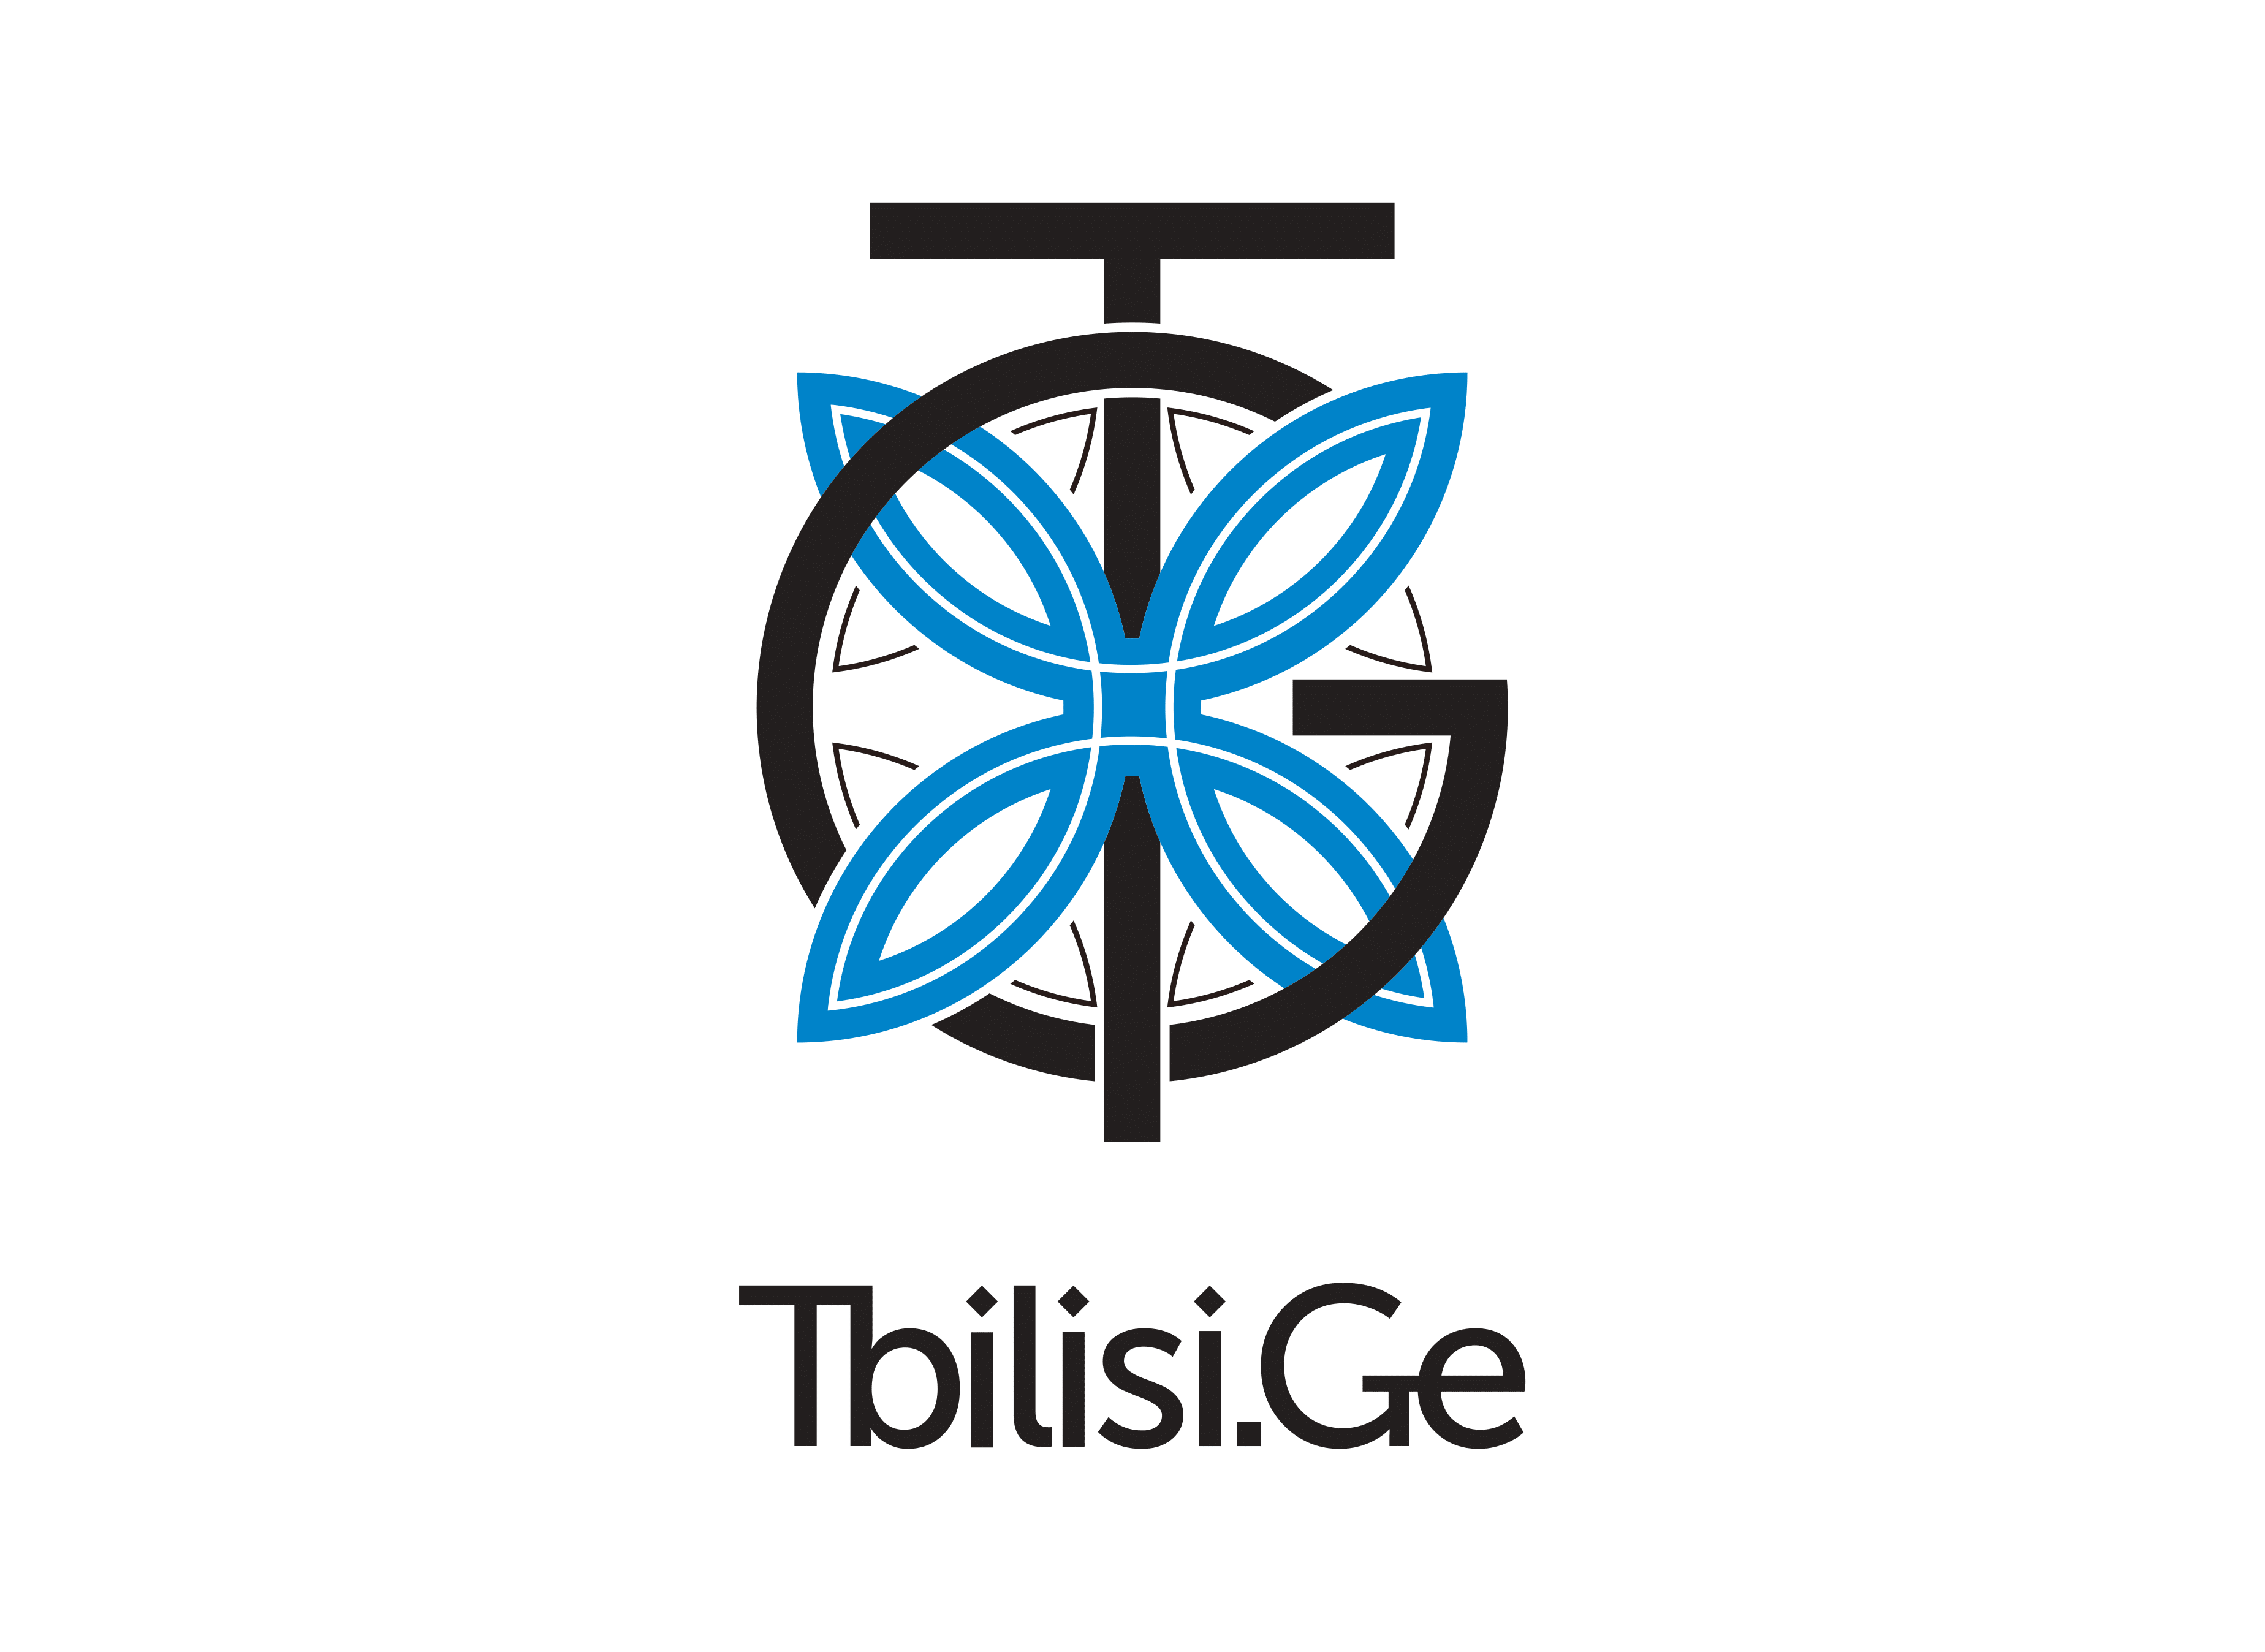 Tbilisi Ge